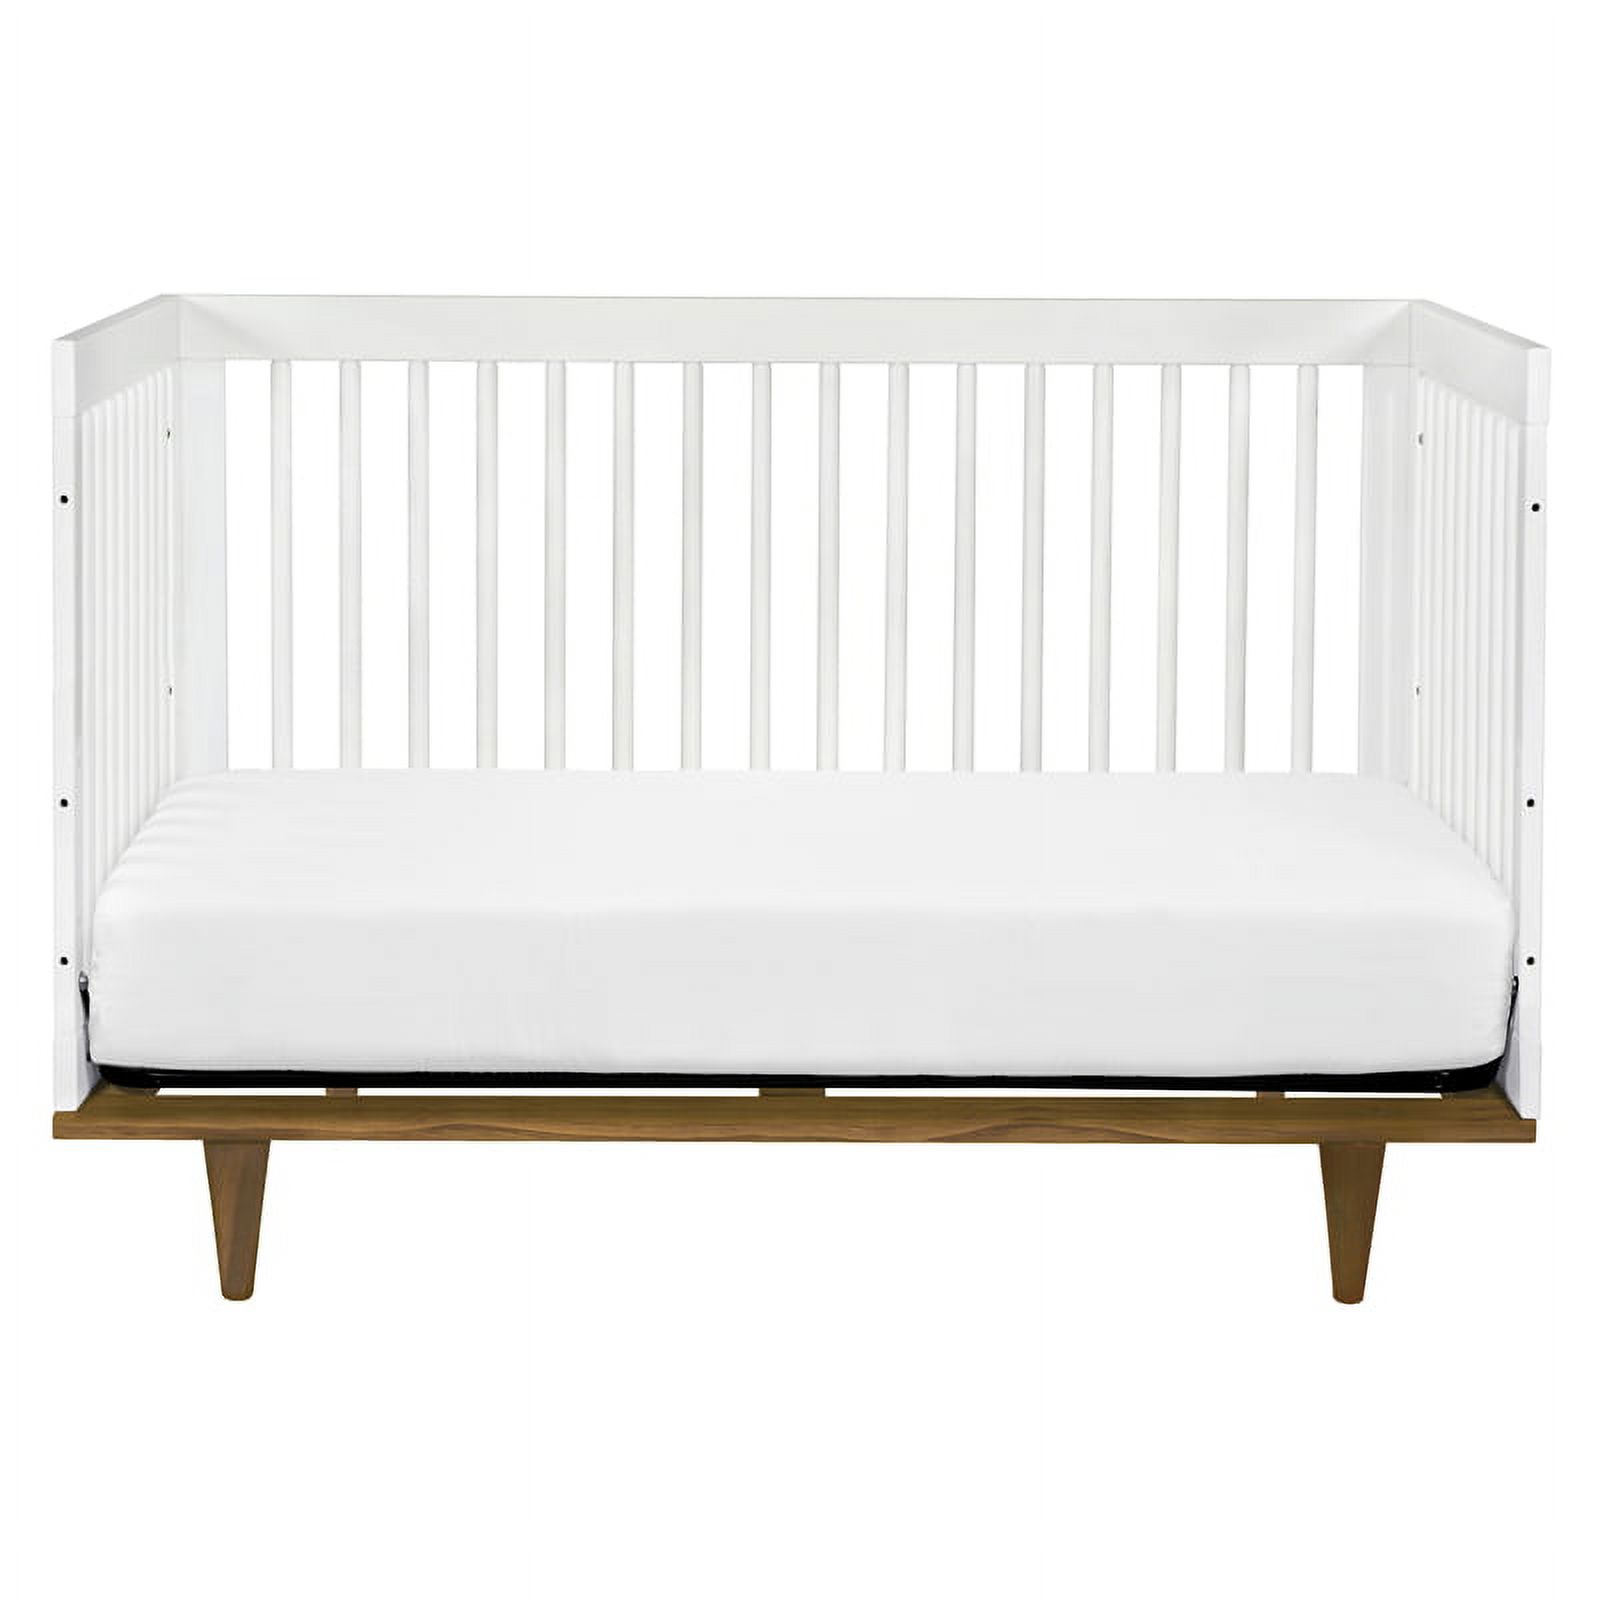 Davinci Marley Modern Pine Wood 3-In-1 Convertible Crib in White/Walnut - image 5 of 10